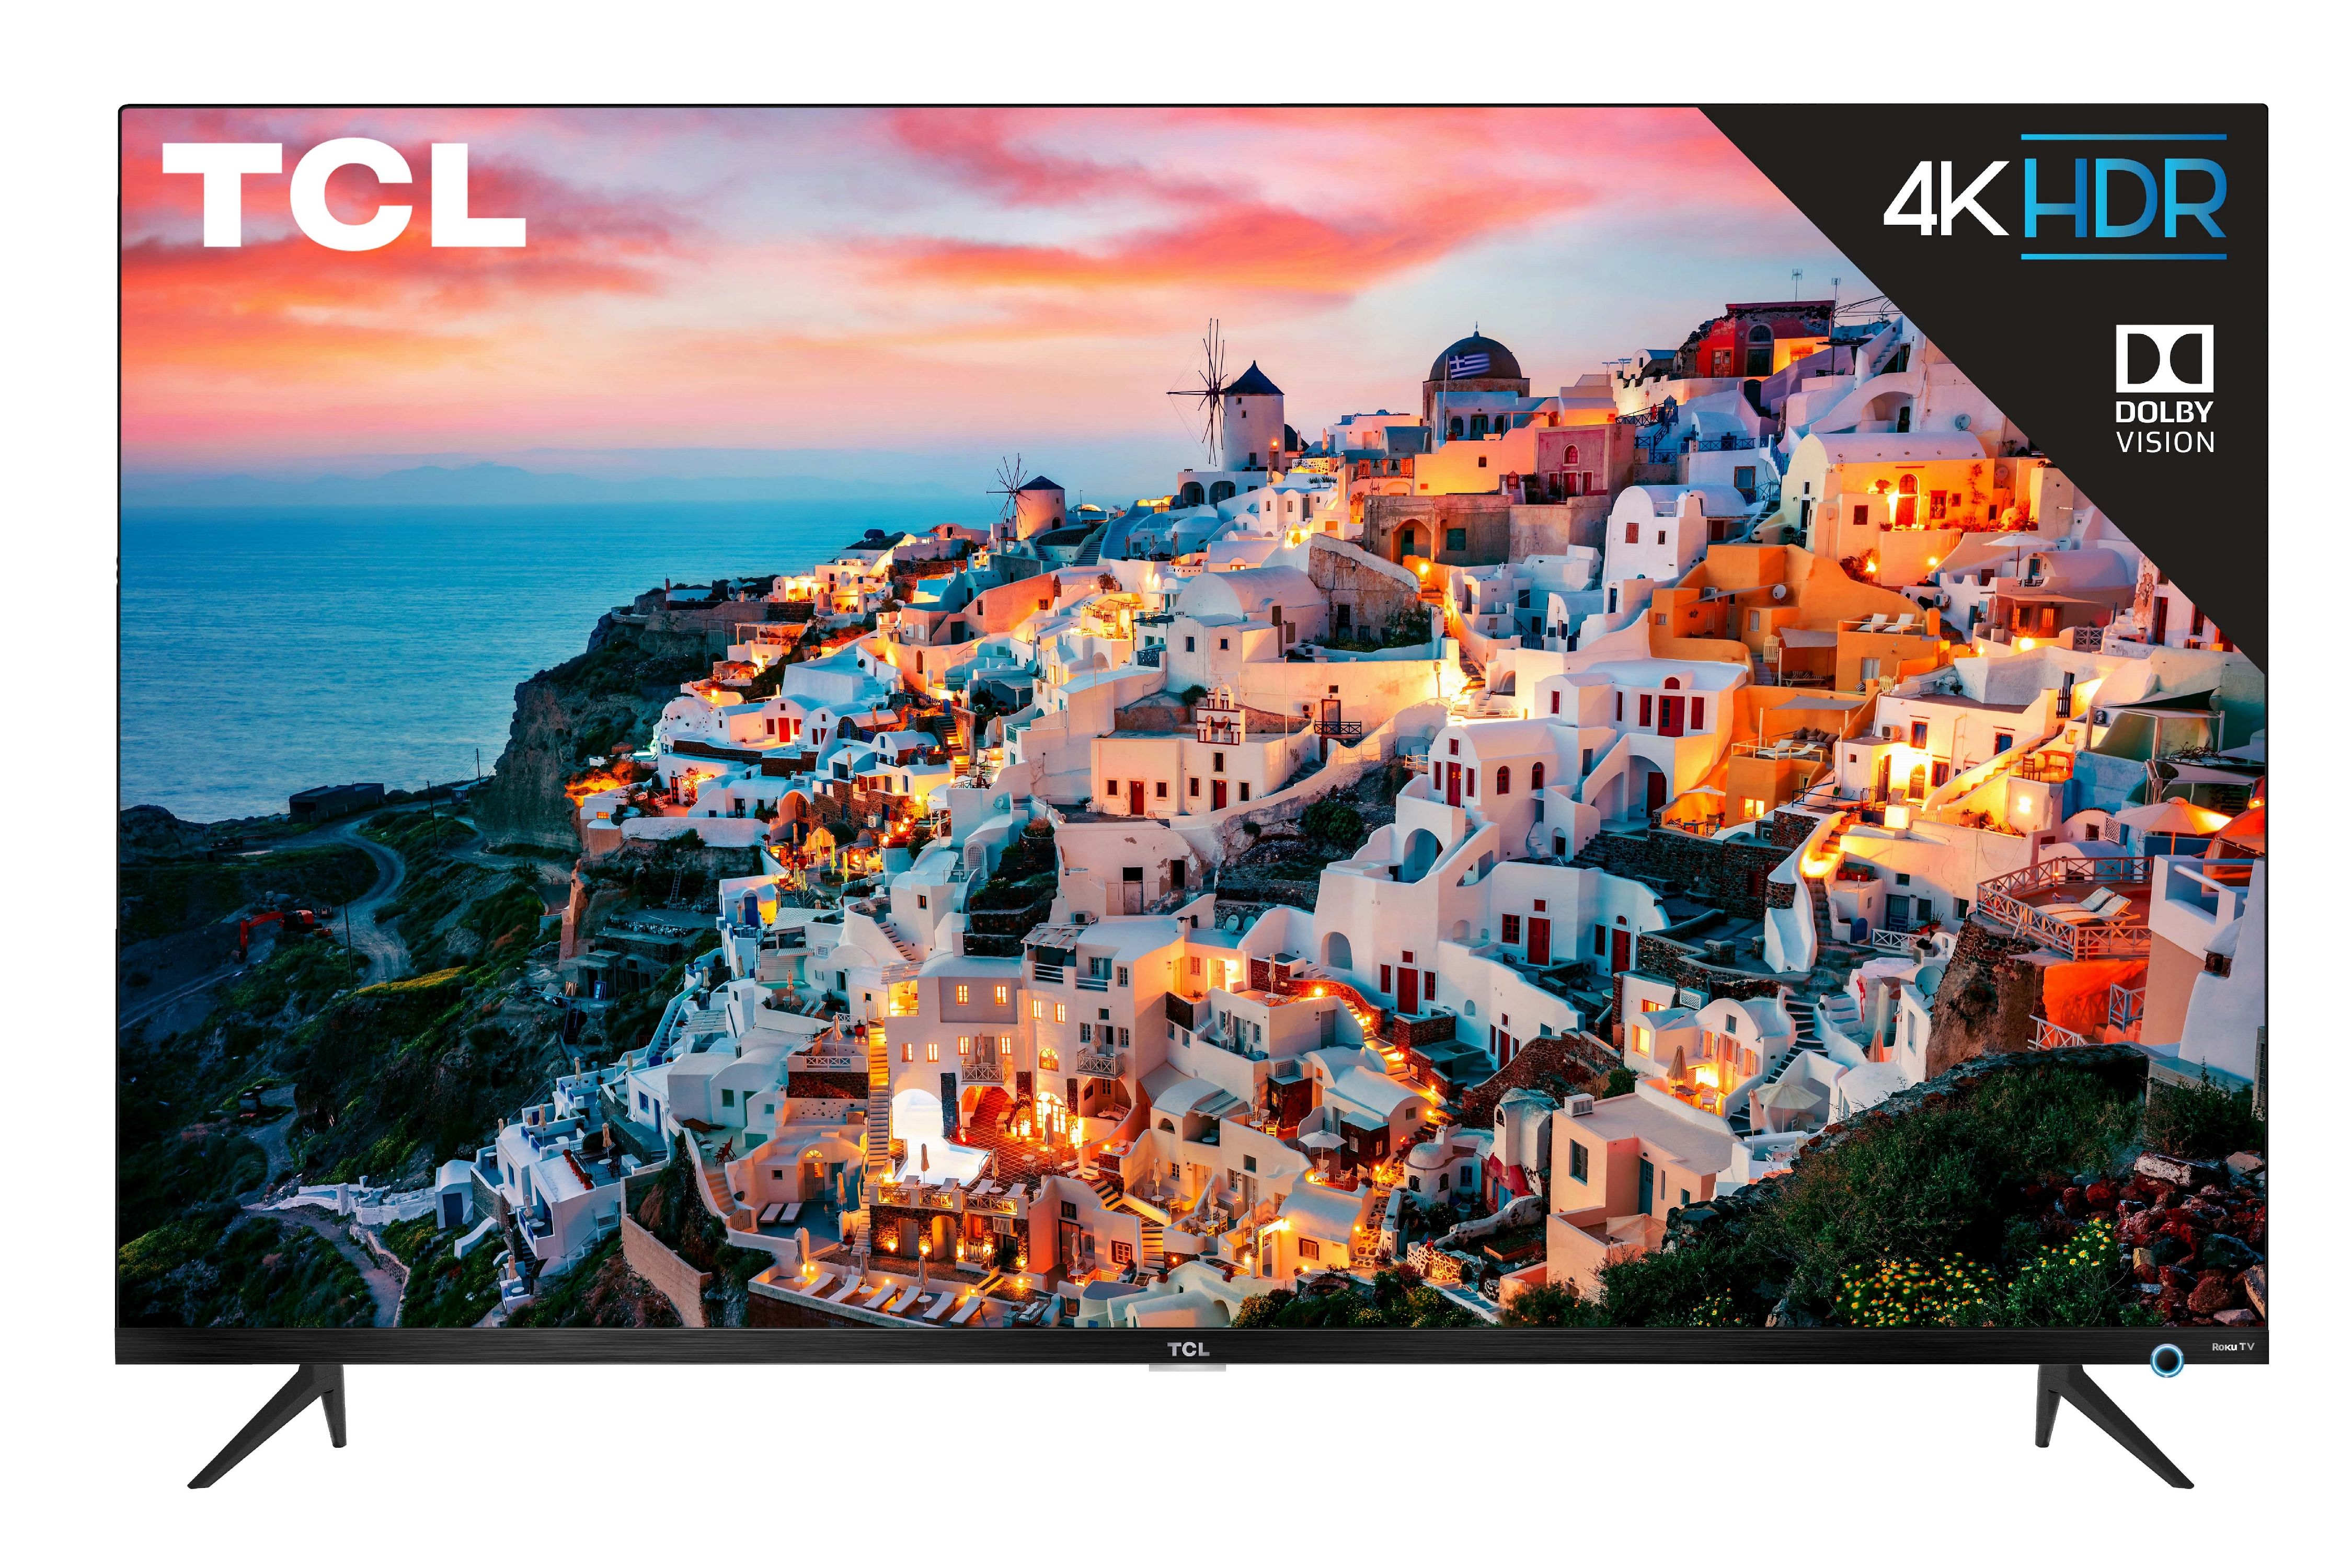 TCL 55" Class 4K UHD LED Roku Smart TV HDR 5 Series 55S525 - image 1 of 12